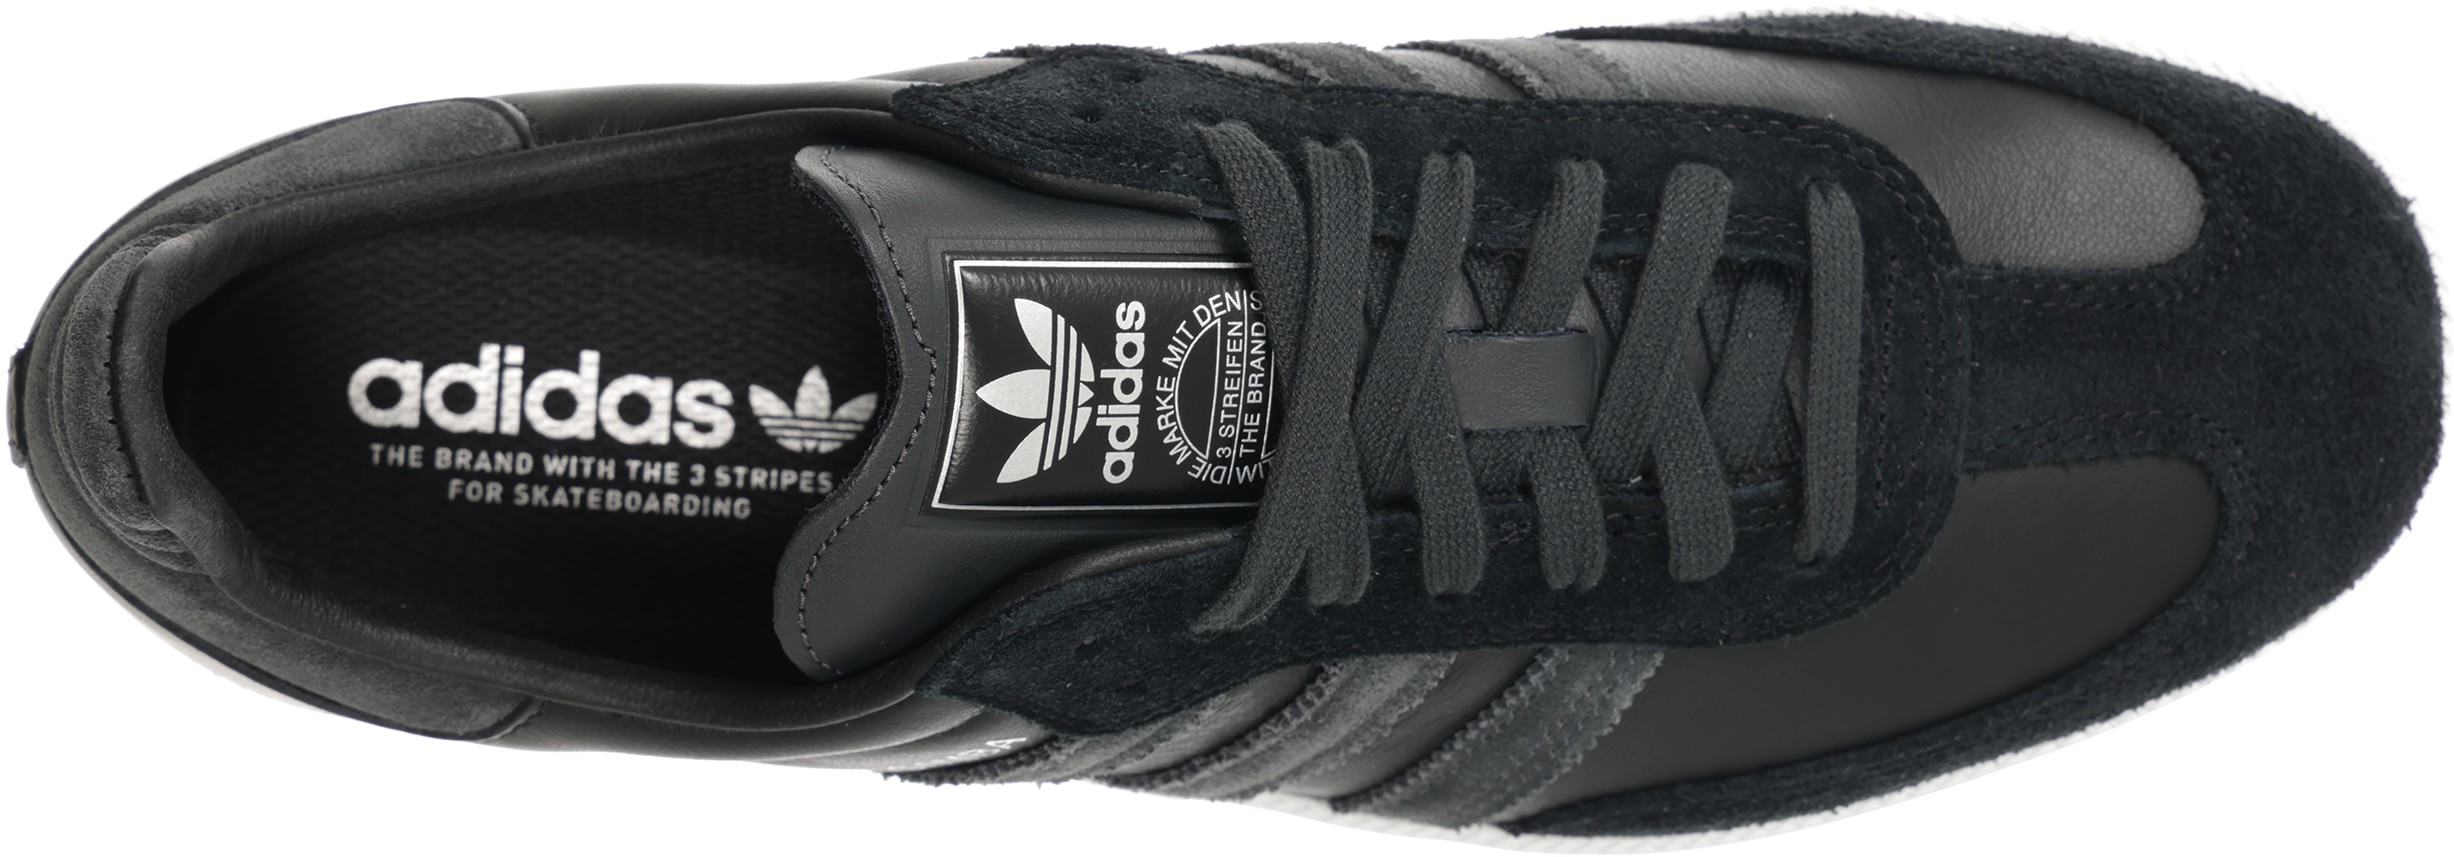 Adidas Samba ADV Skate Shoes - core black/carbon/silver metallic | Tactics